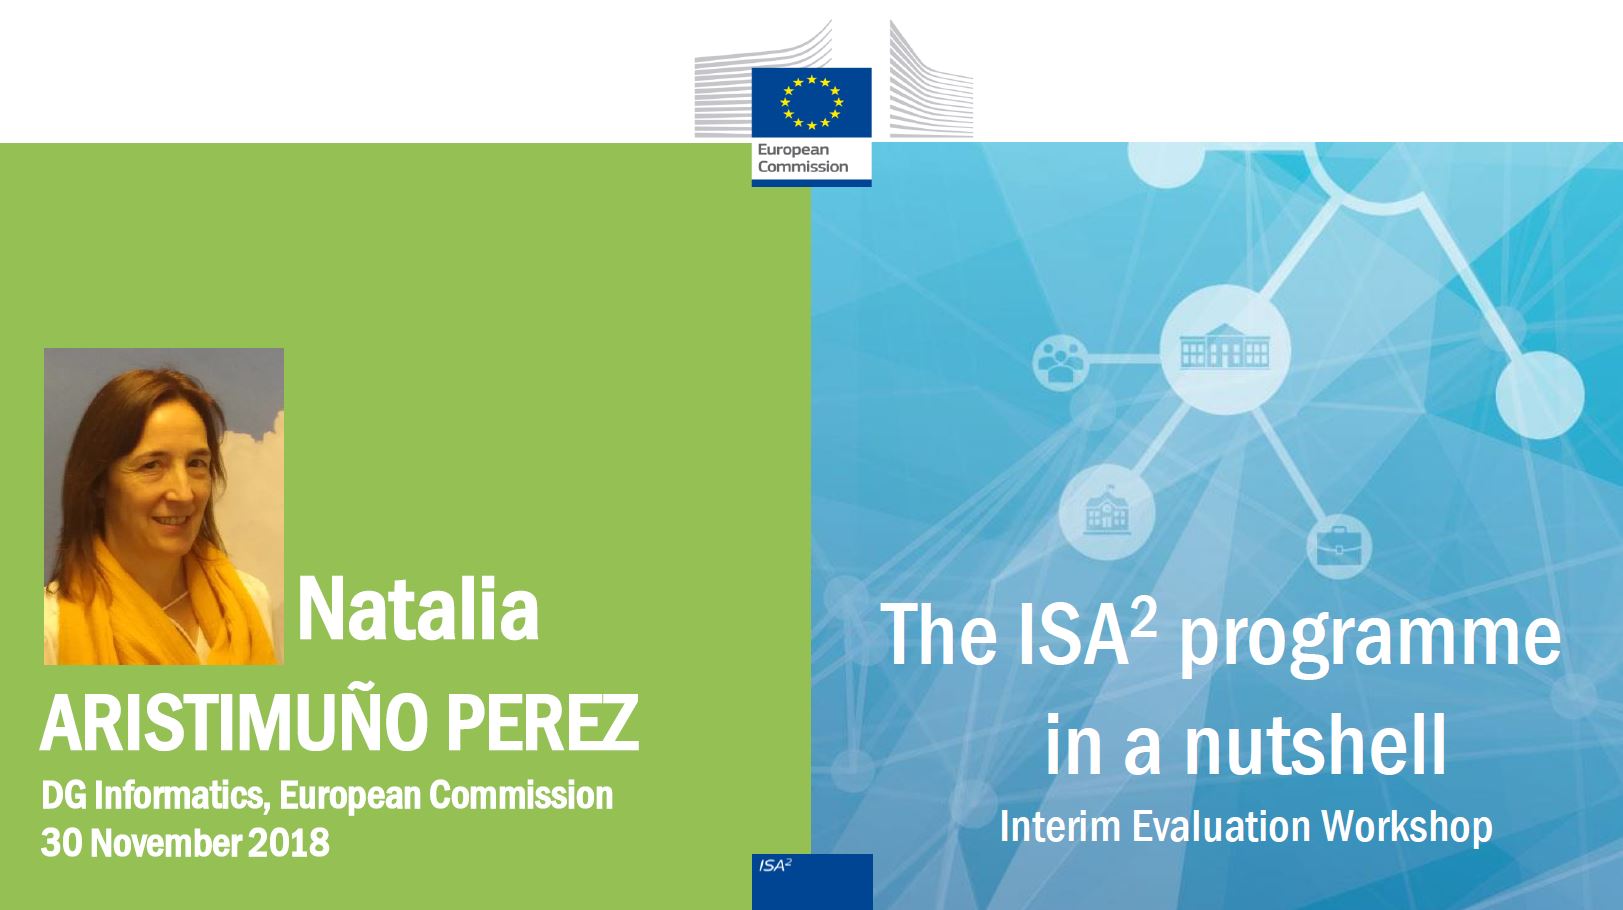 ISA² Interim Evaluation Workshop